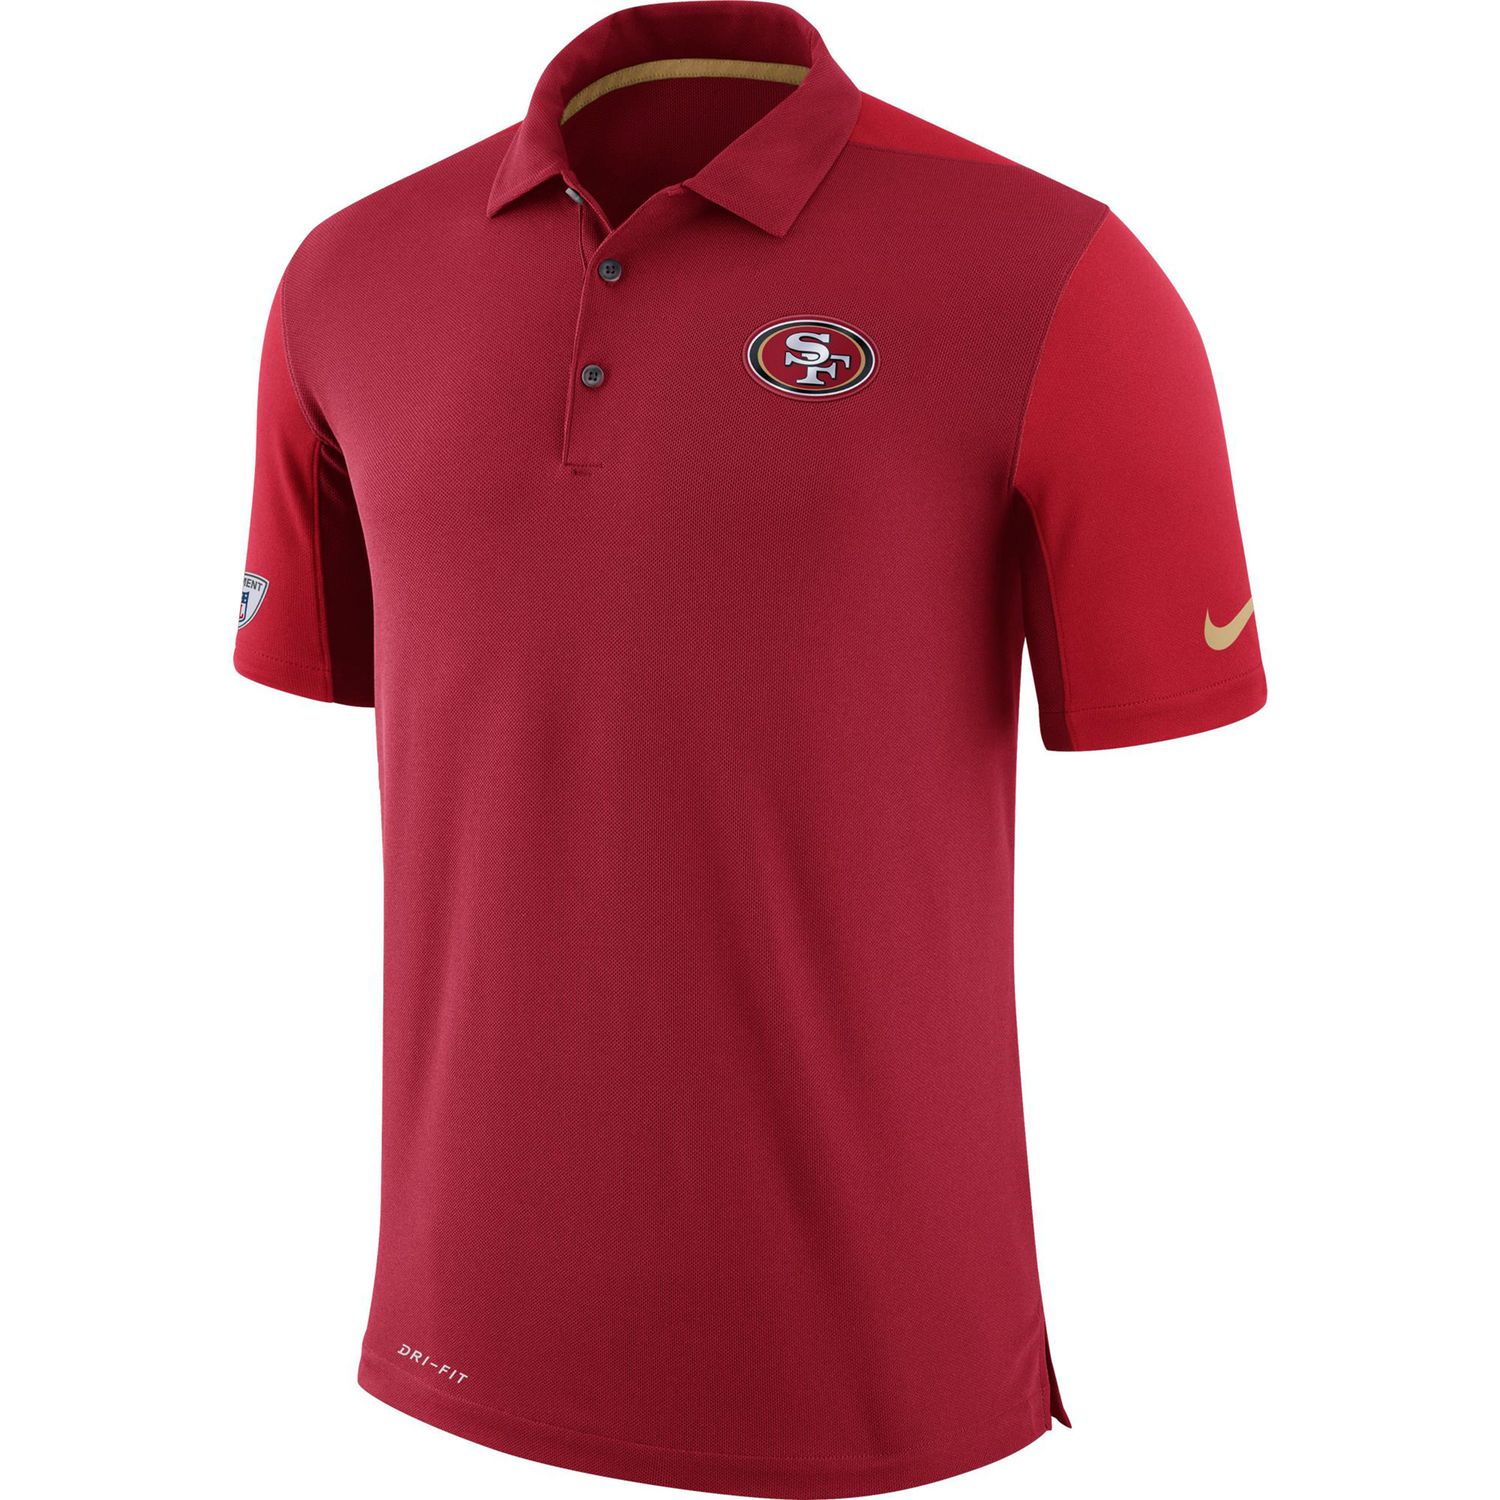 Men's Nike San Francisco 49ers Polo Shirt